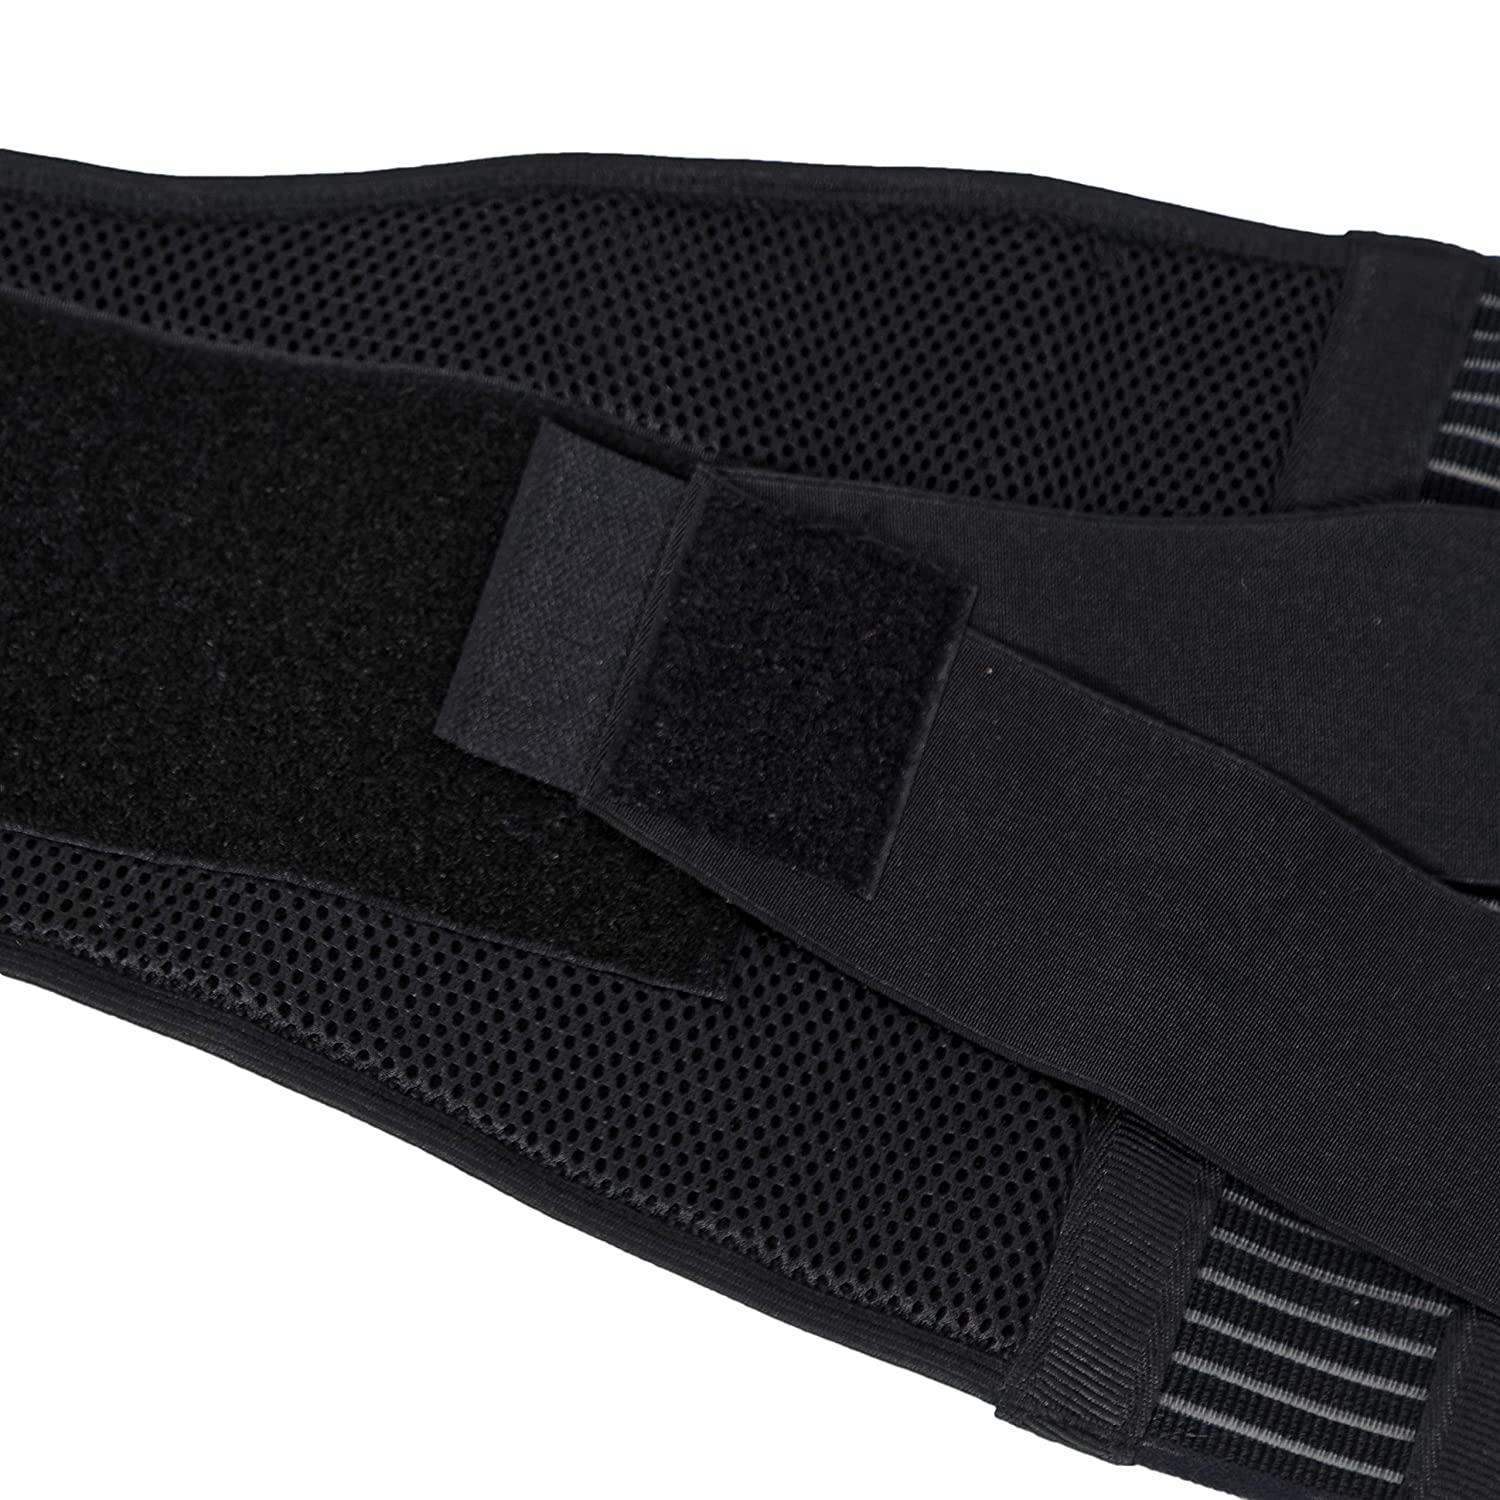 NeoTech Care Adjustable Compression Wide Back Brace Lumbar Support Belt  (Charcoal, Size L) L Charcoal